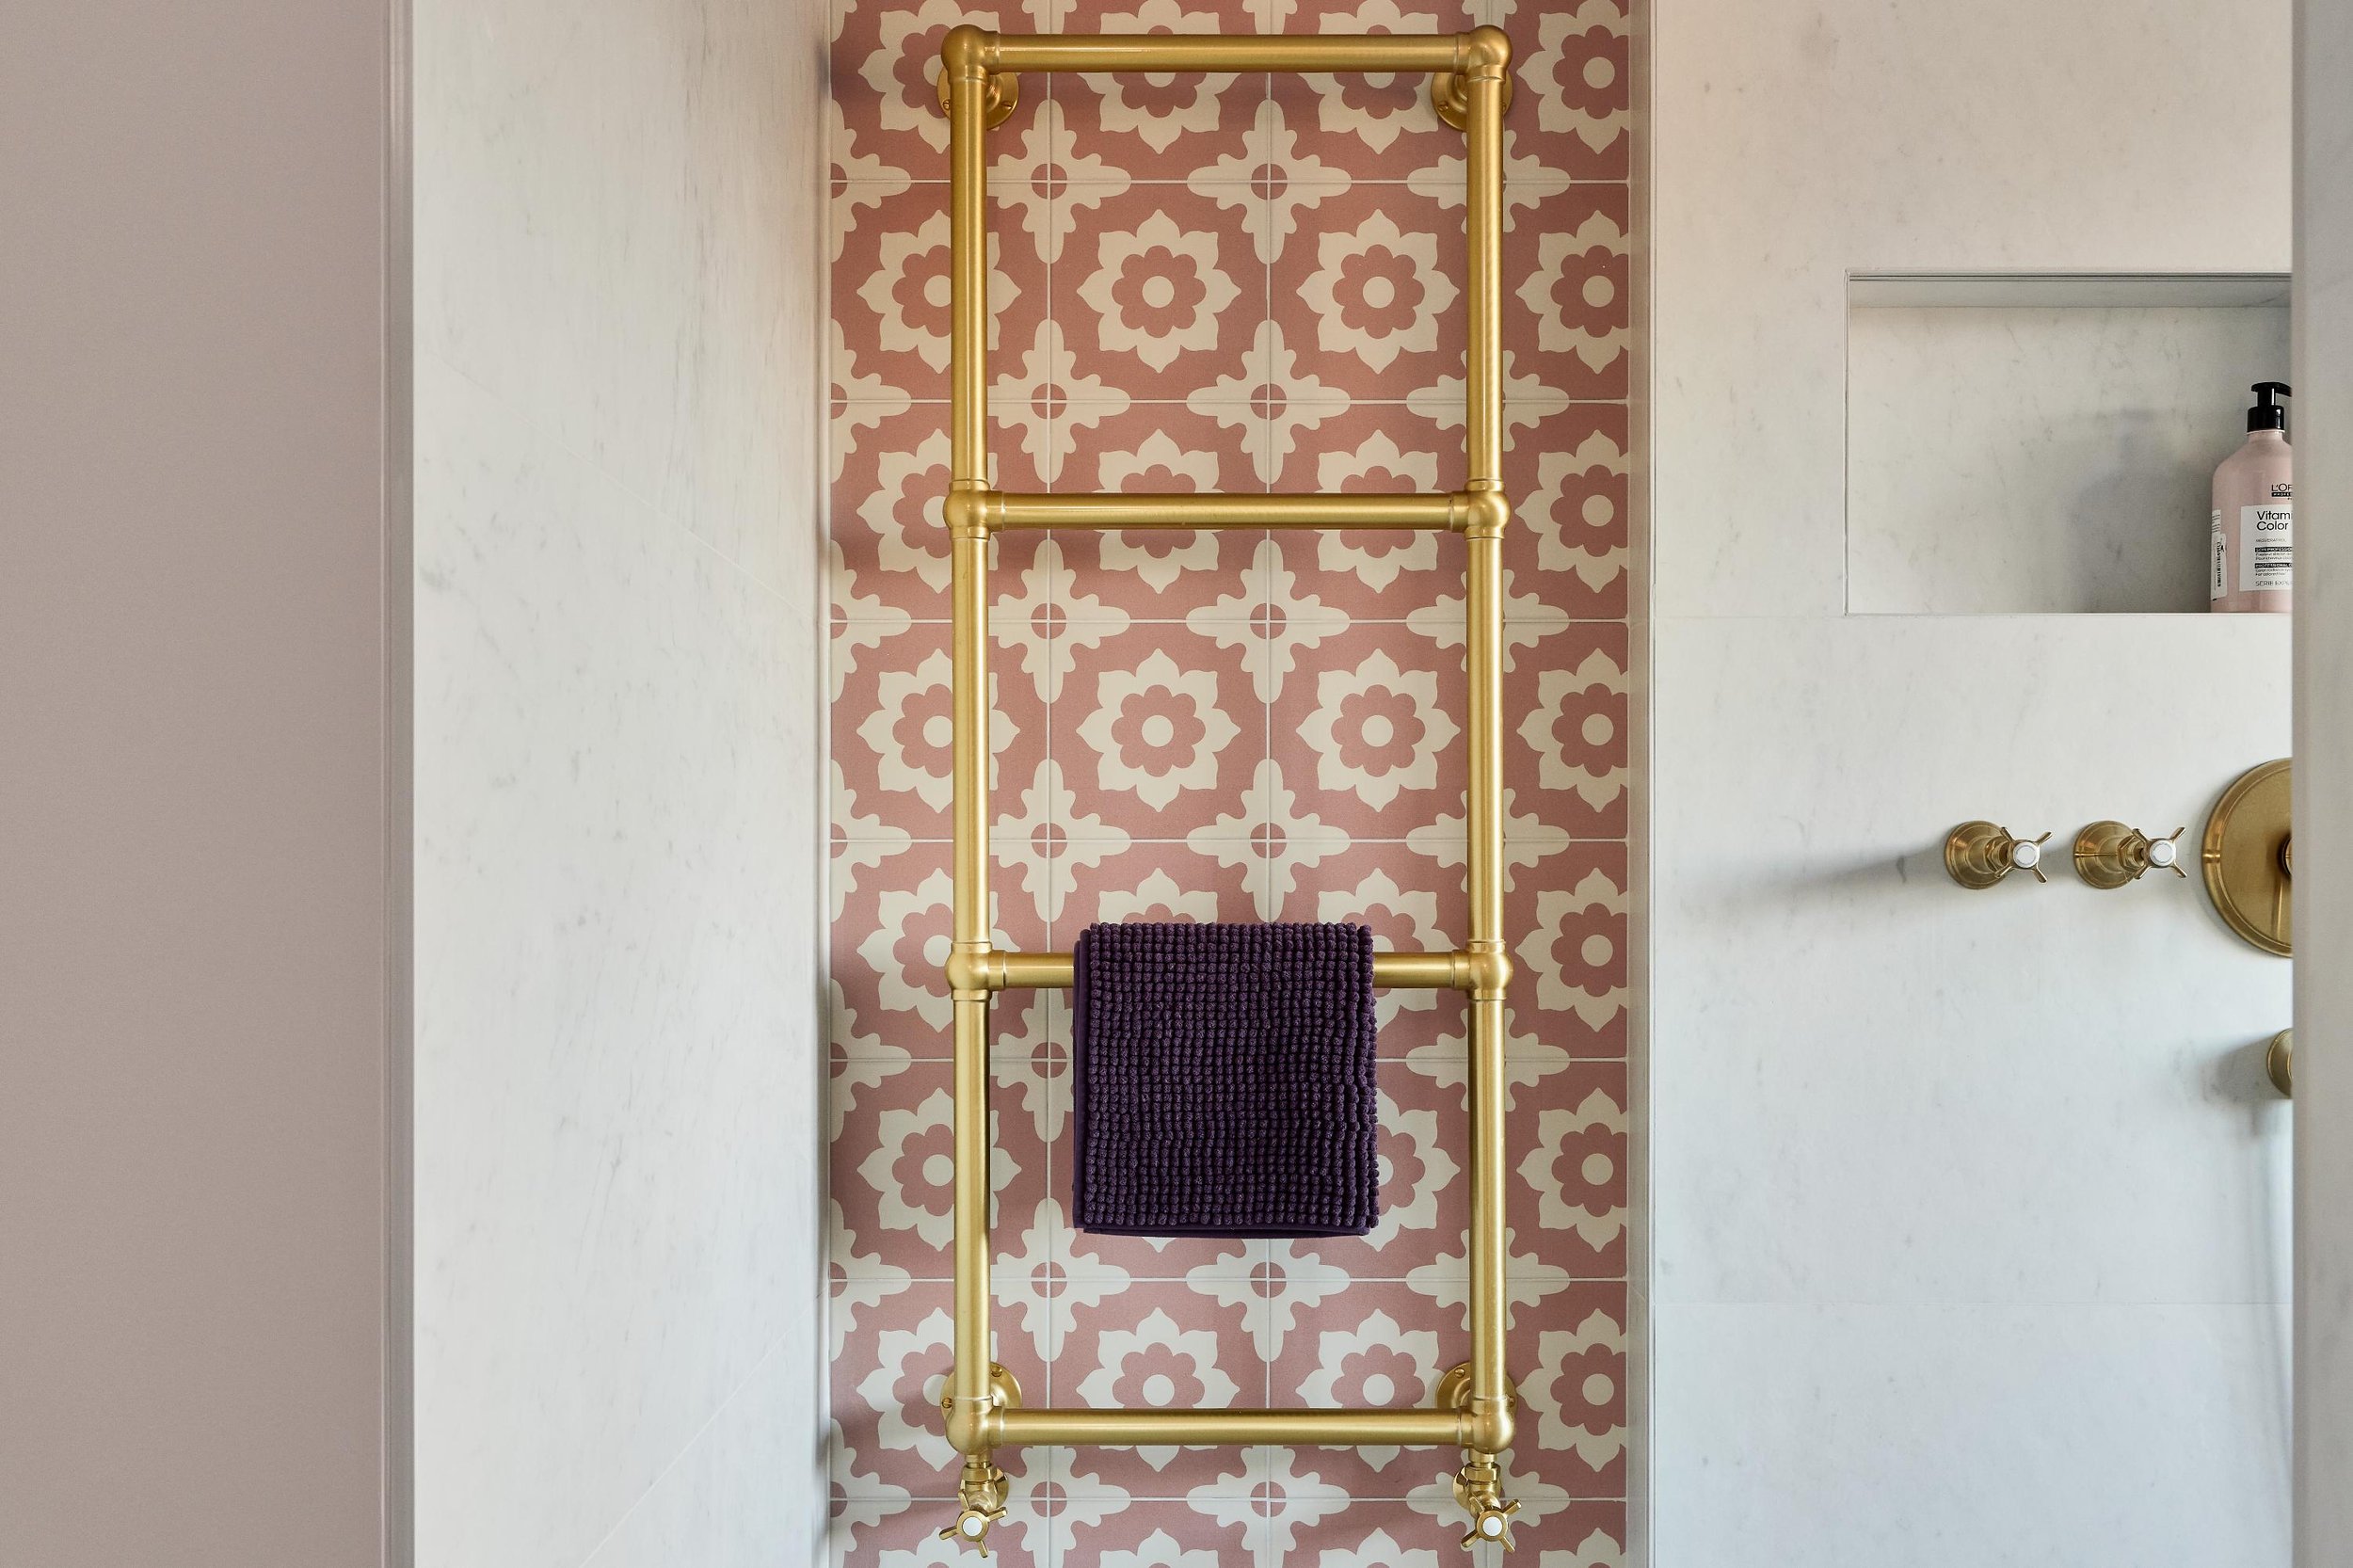 ripples-bathroom-with-brushed-gold-furniture-towel-holder.jpg